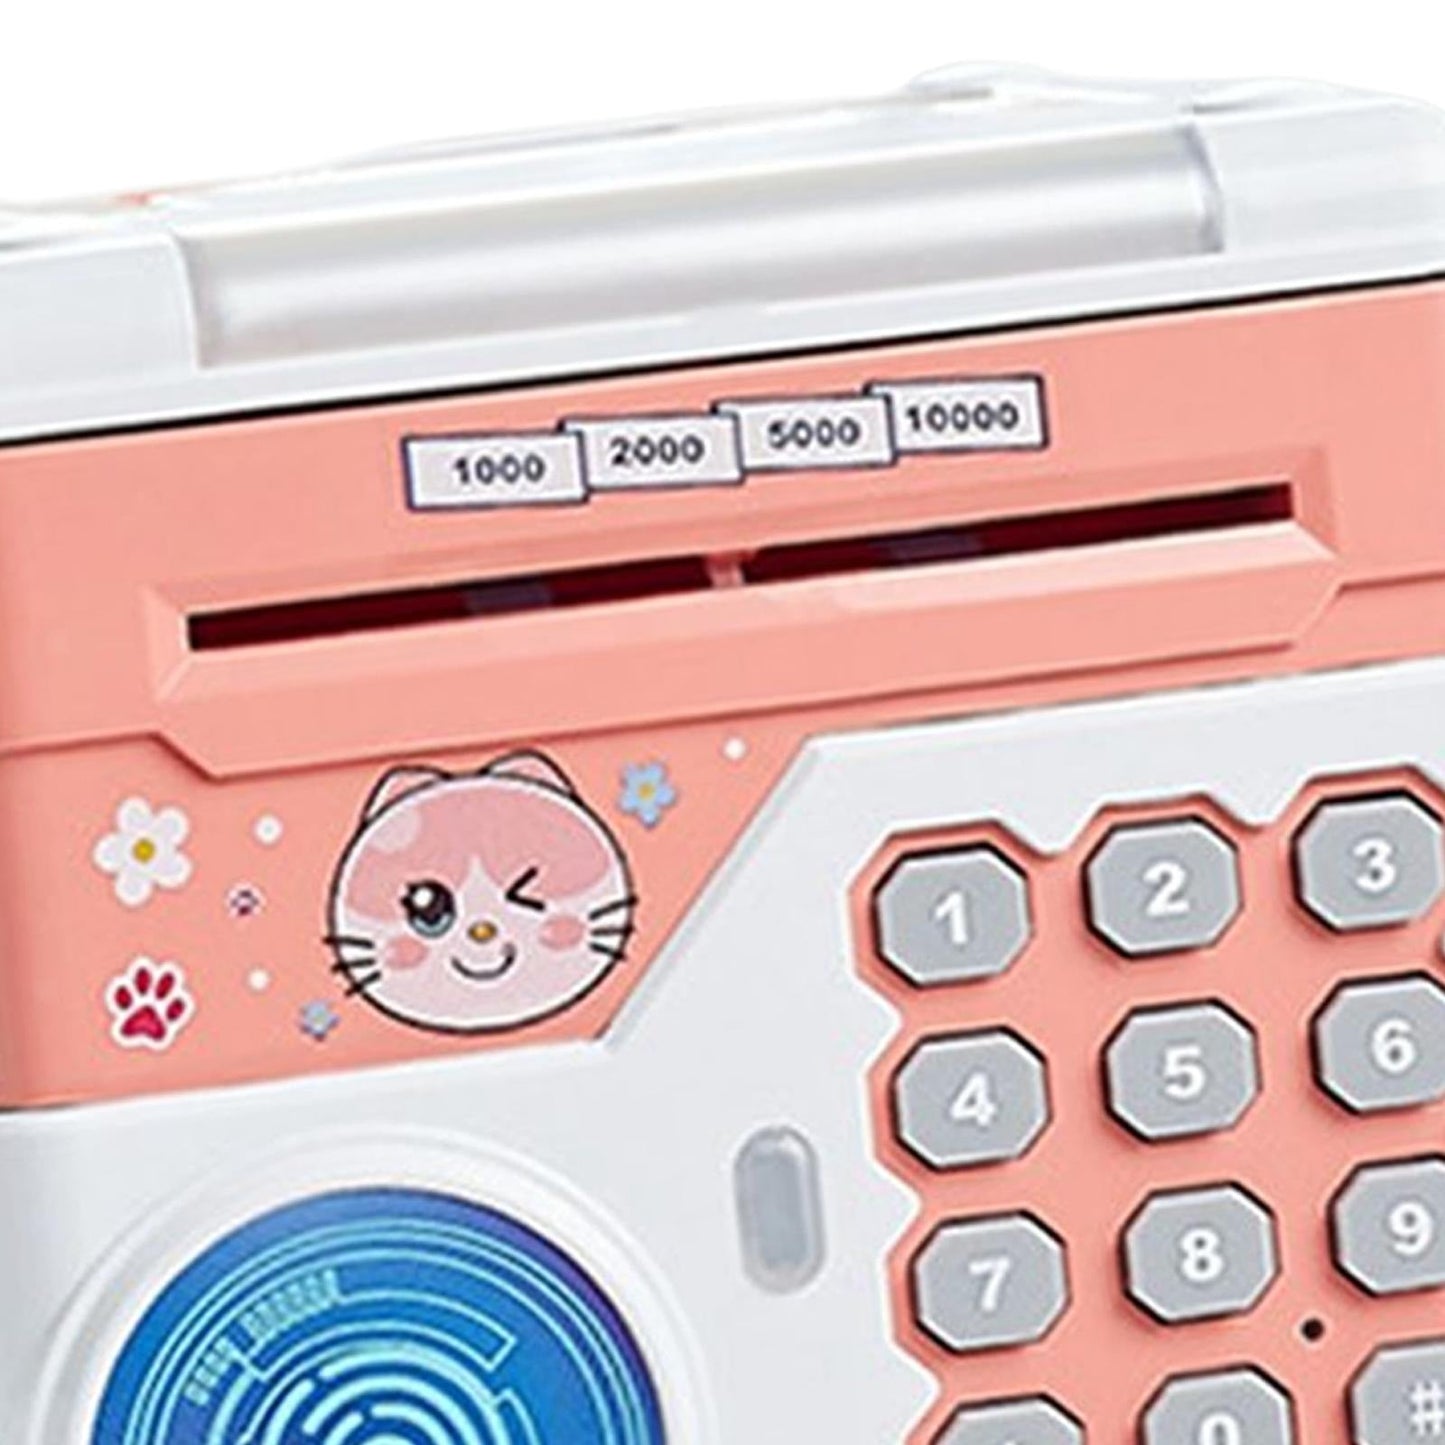 Kids Piggy Bank Password Protection Automatic Saving Bank Toy